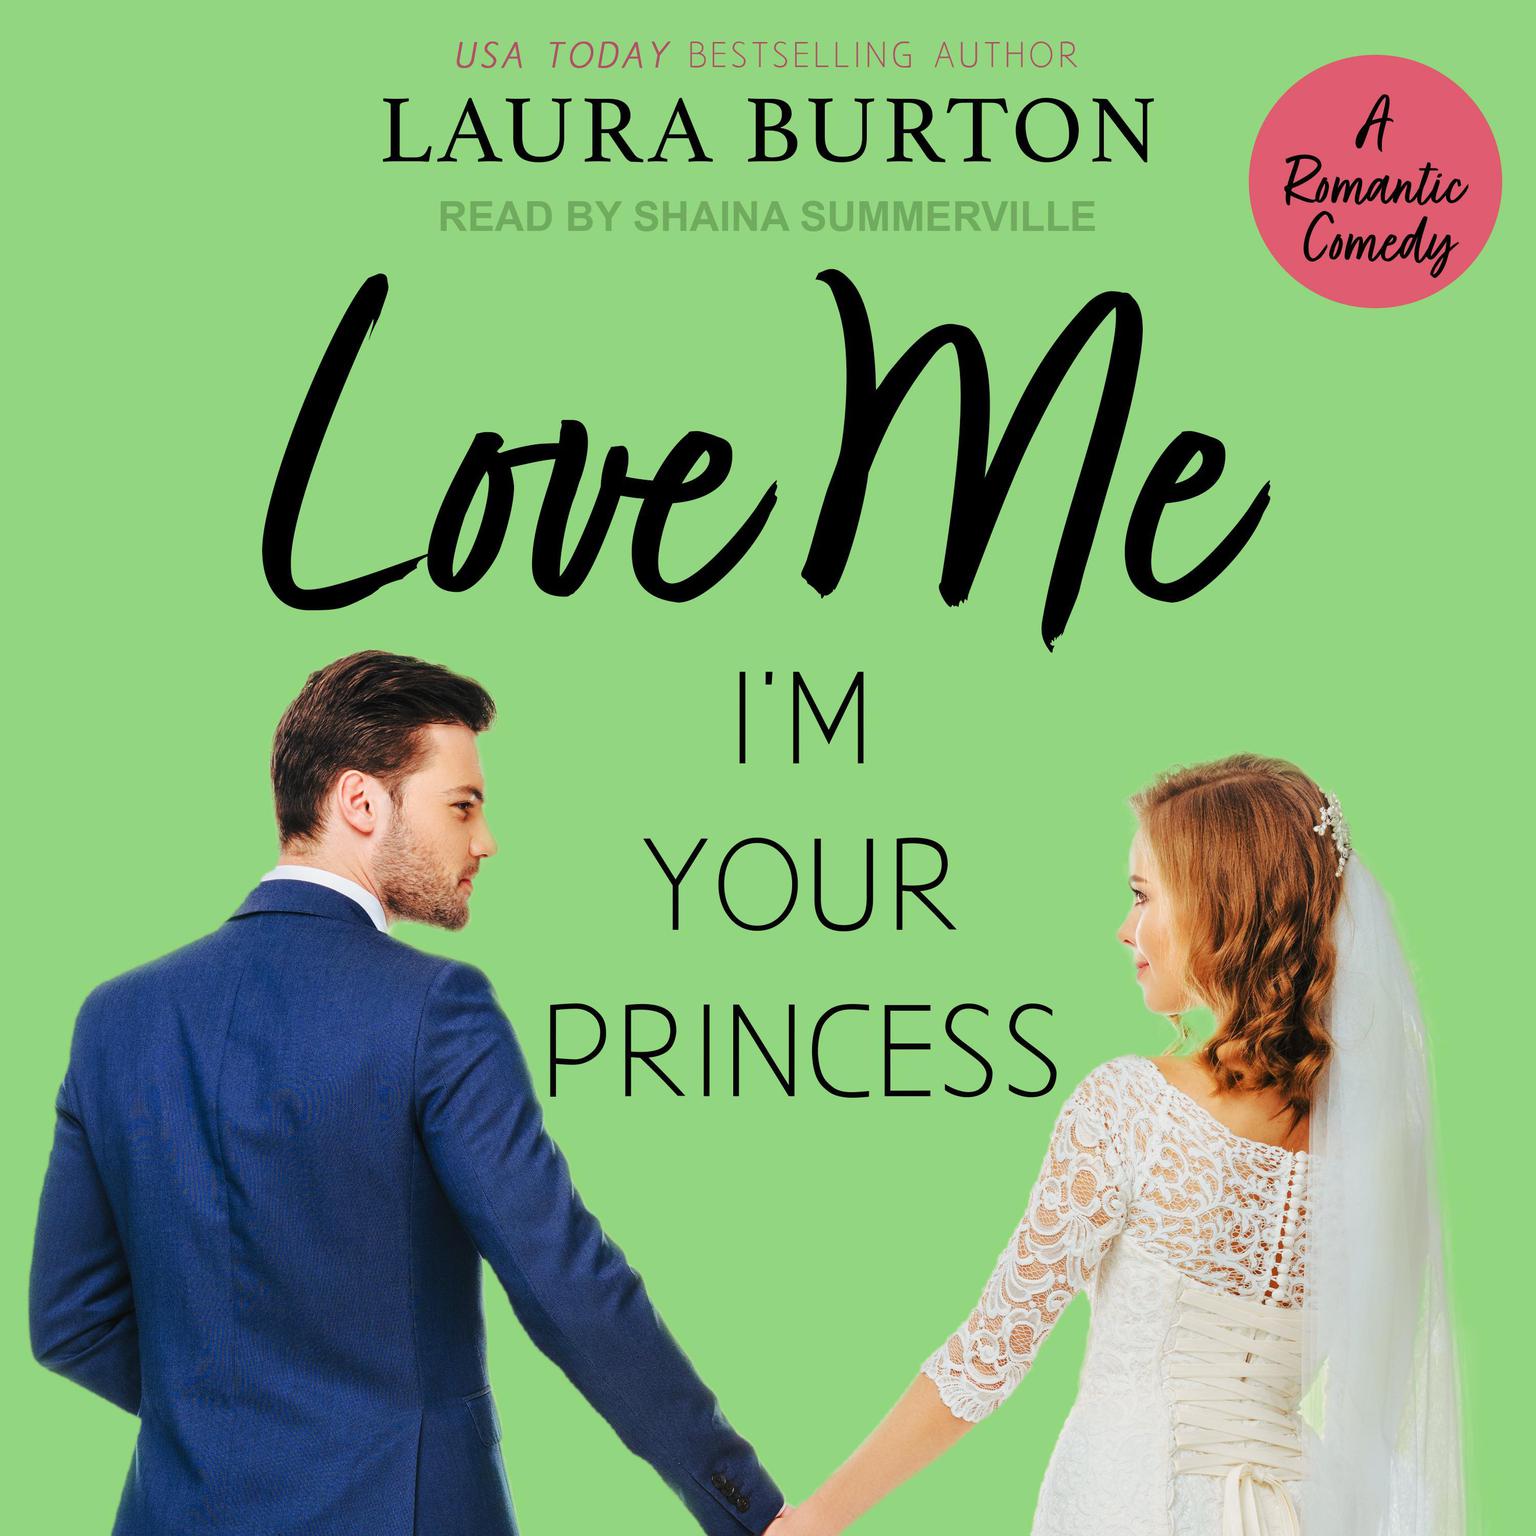 Love Me Im Your Princess Audiobook, by Laura Burton